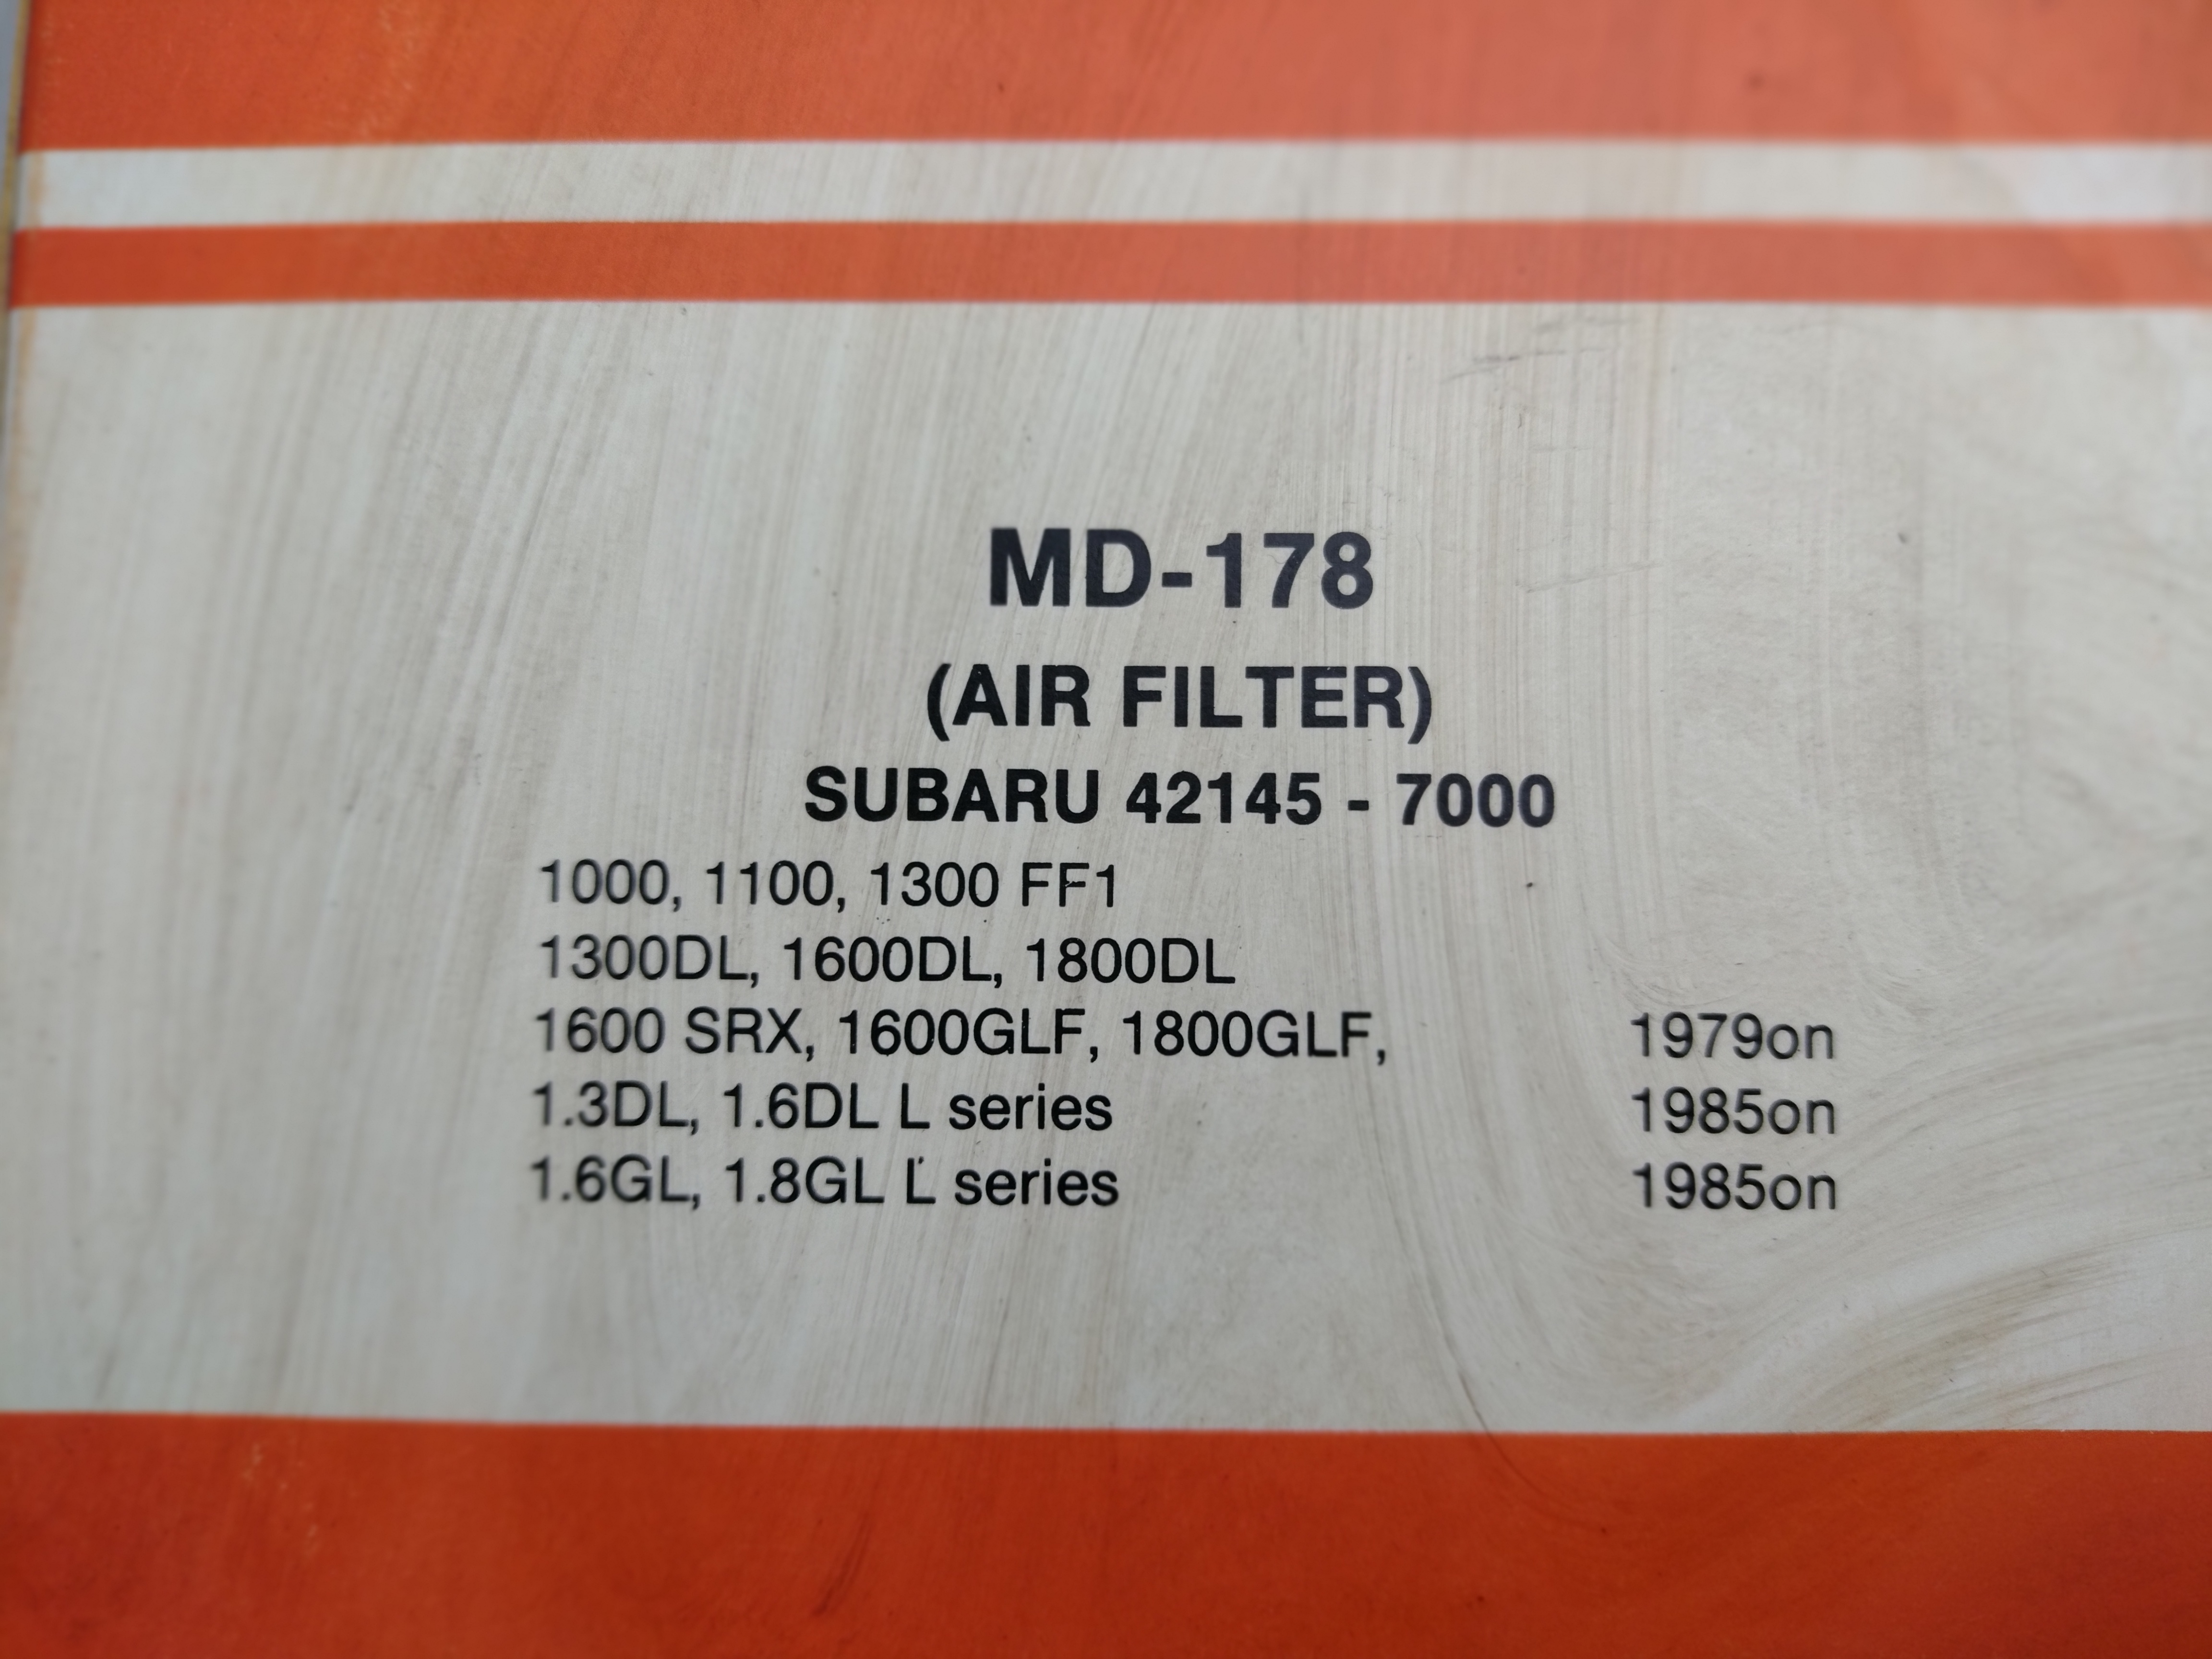 ALCO Luftfilter MD-178 für Subaru 16546-AA070 L-Serie Leone 1000 1300 1600 1800DL 1.3DL 1.6DL 1.8DL